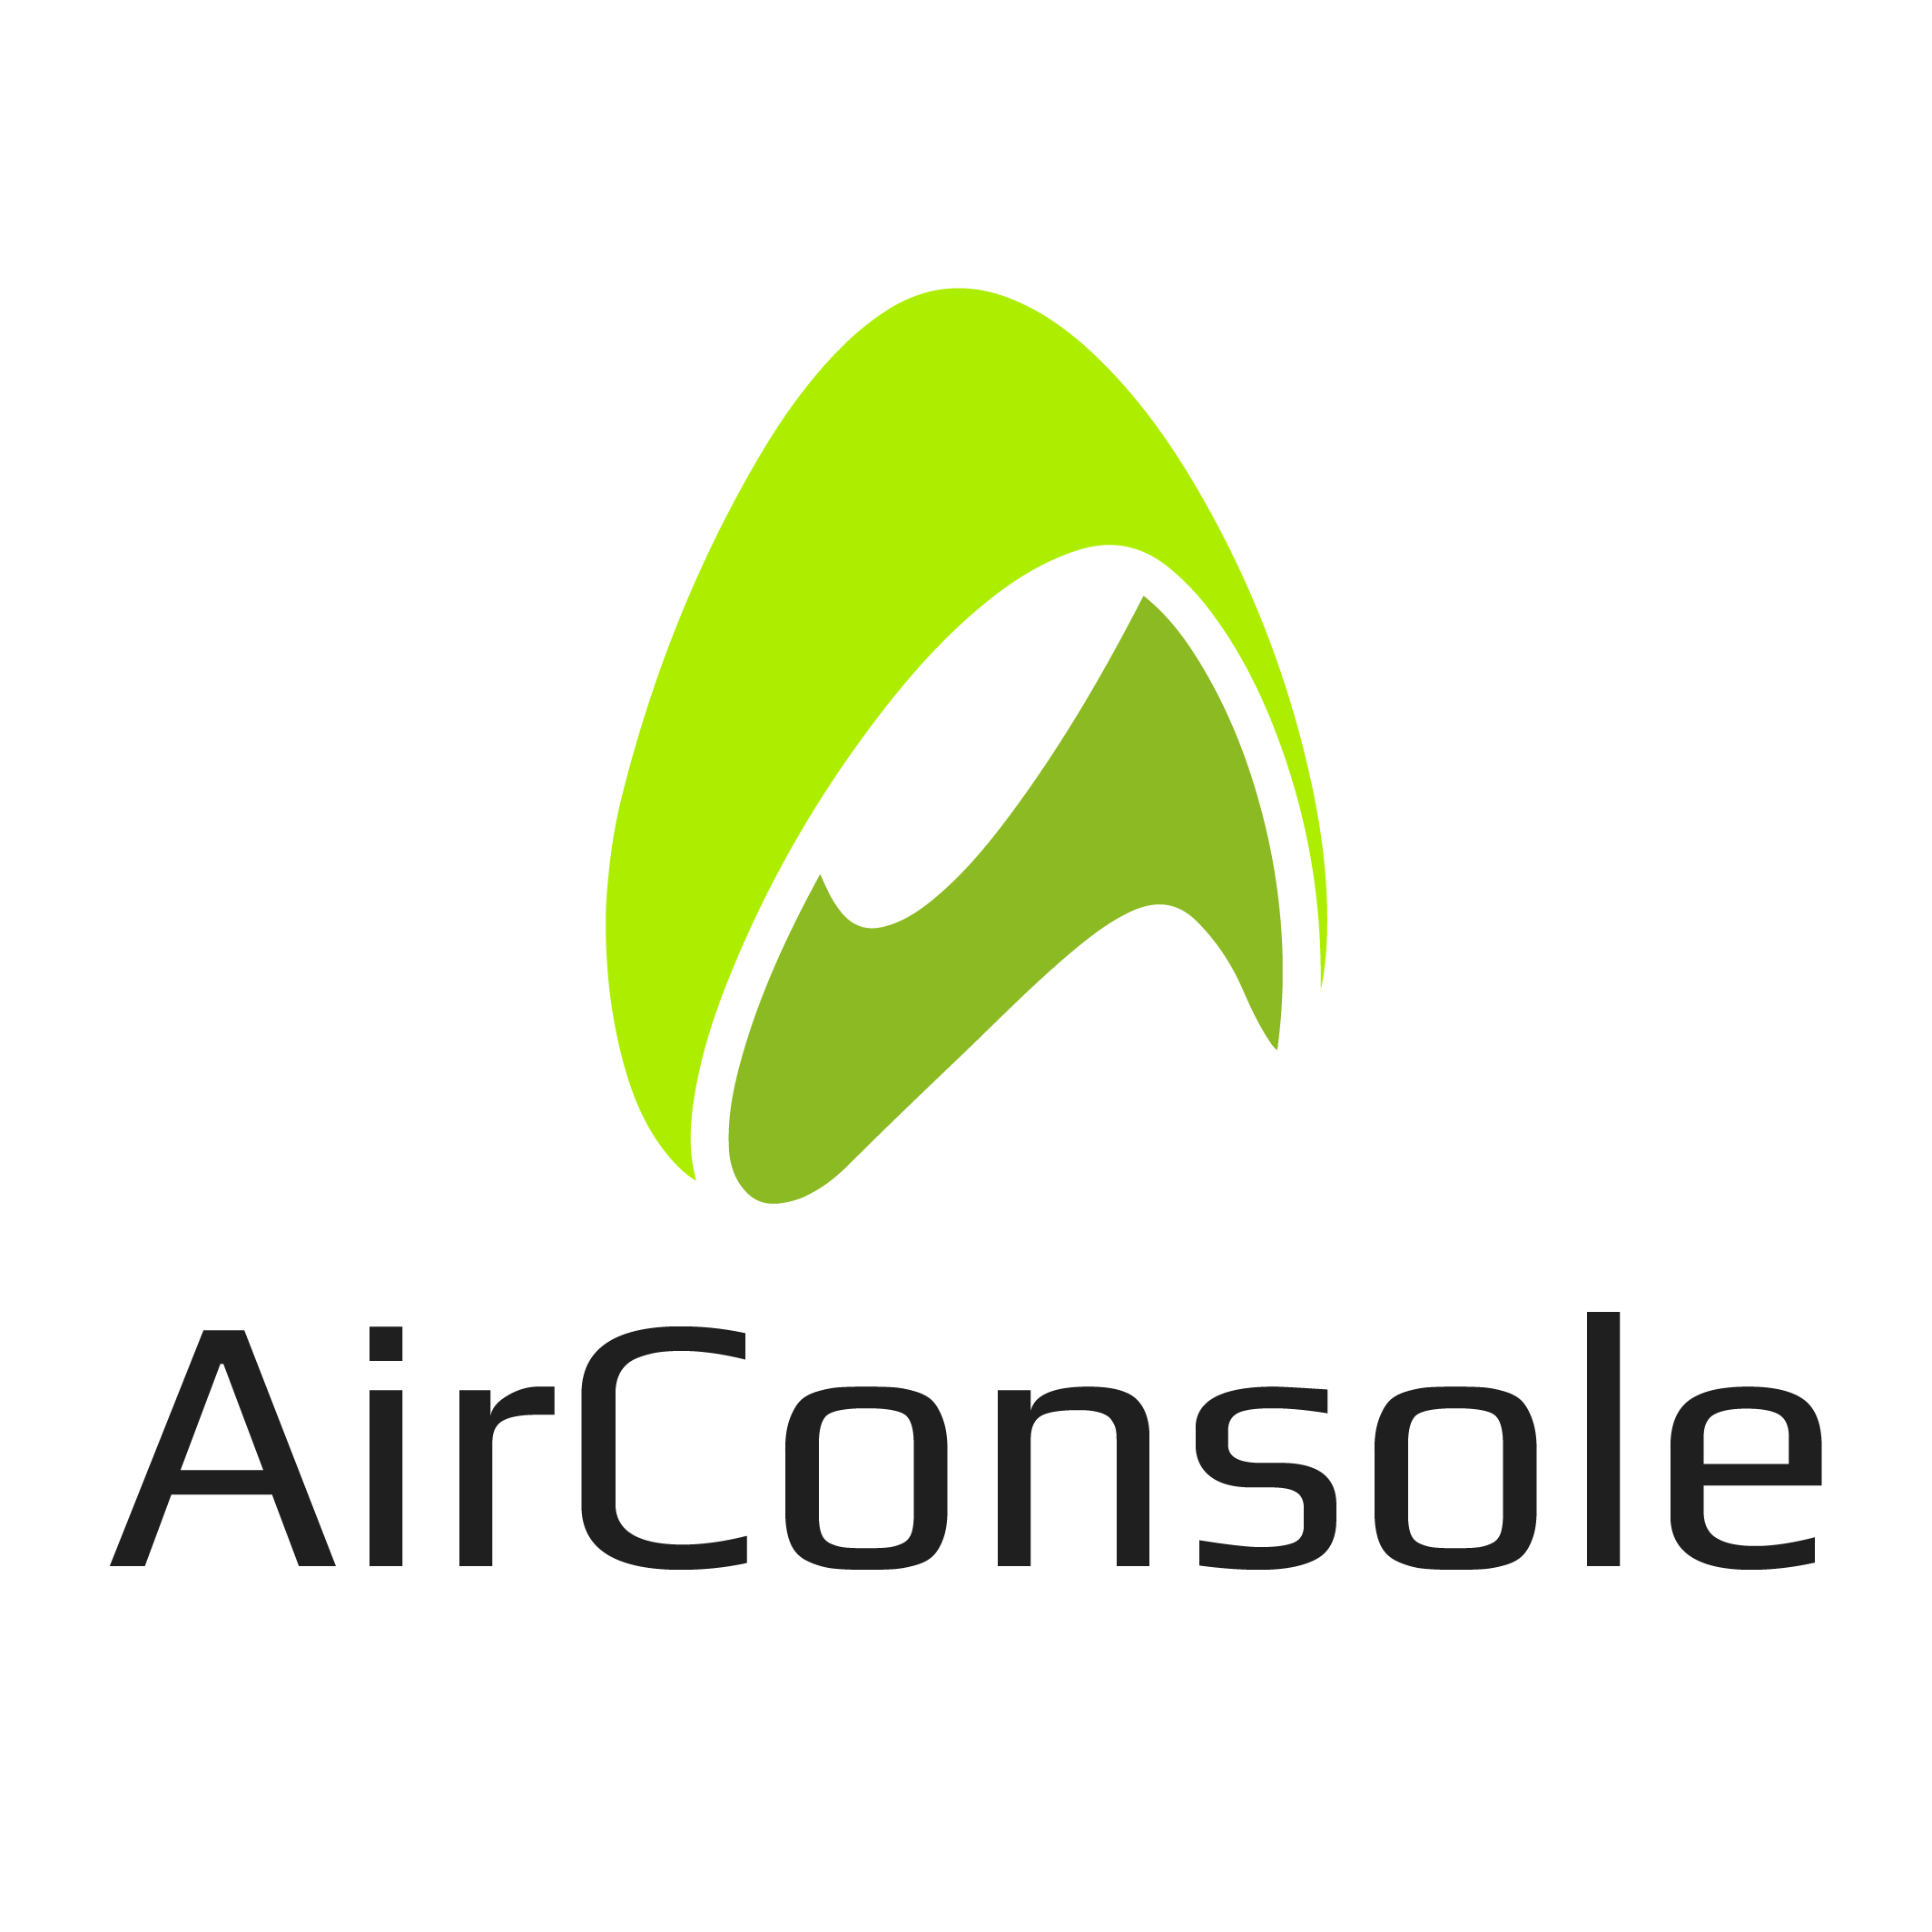 AirConsole Logo